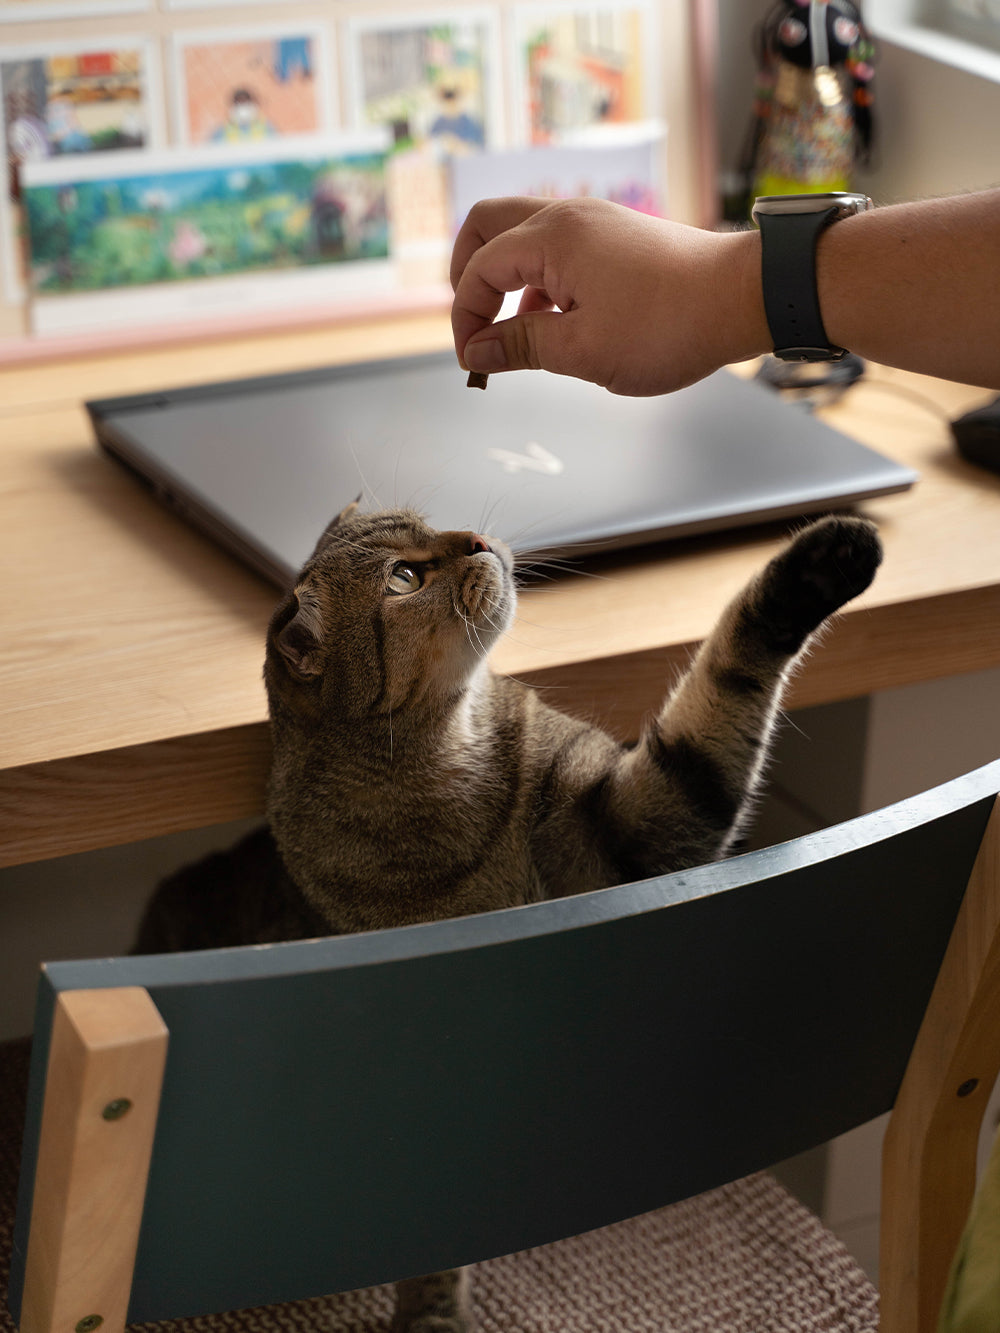 SOJAO-house-to-home-tour-journal-loftandorder-cat-reaching-for-food.jpg